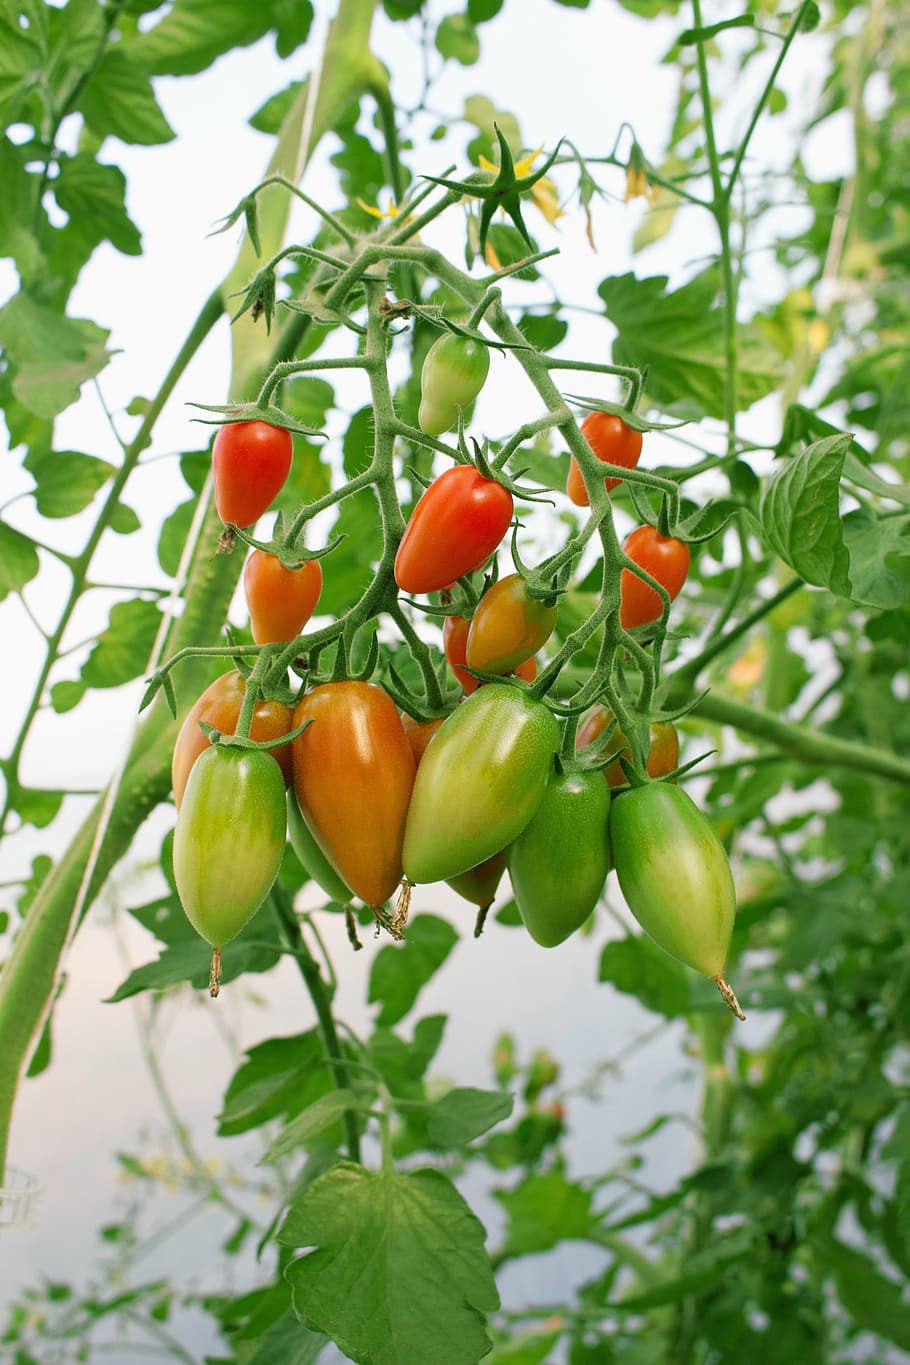 tomatoes, nachtschattengewächs, tomatenrispe, tomato breeding, vegetable growing, bush, food, mature, vegetables, bush tomatoes